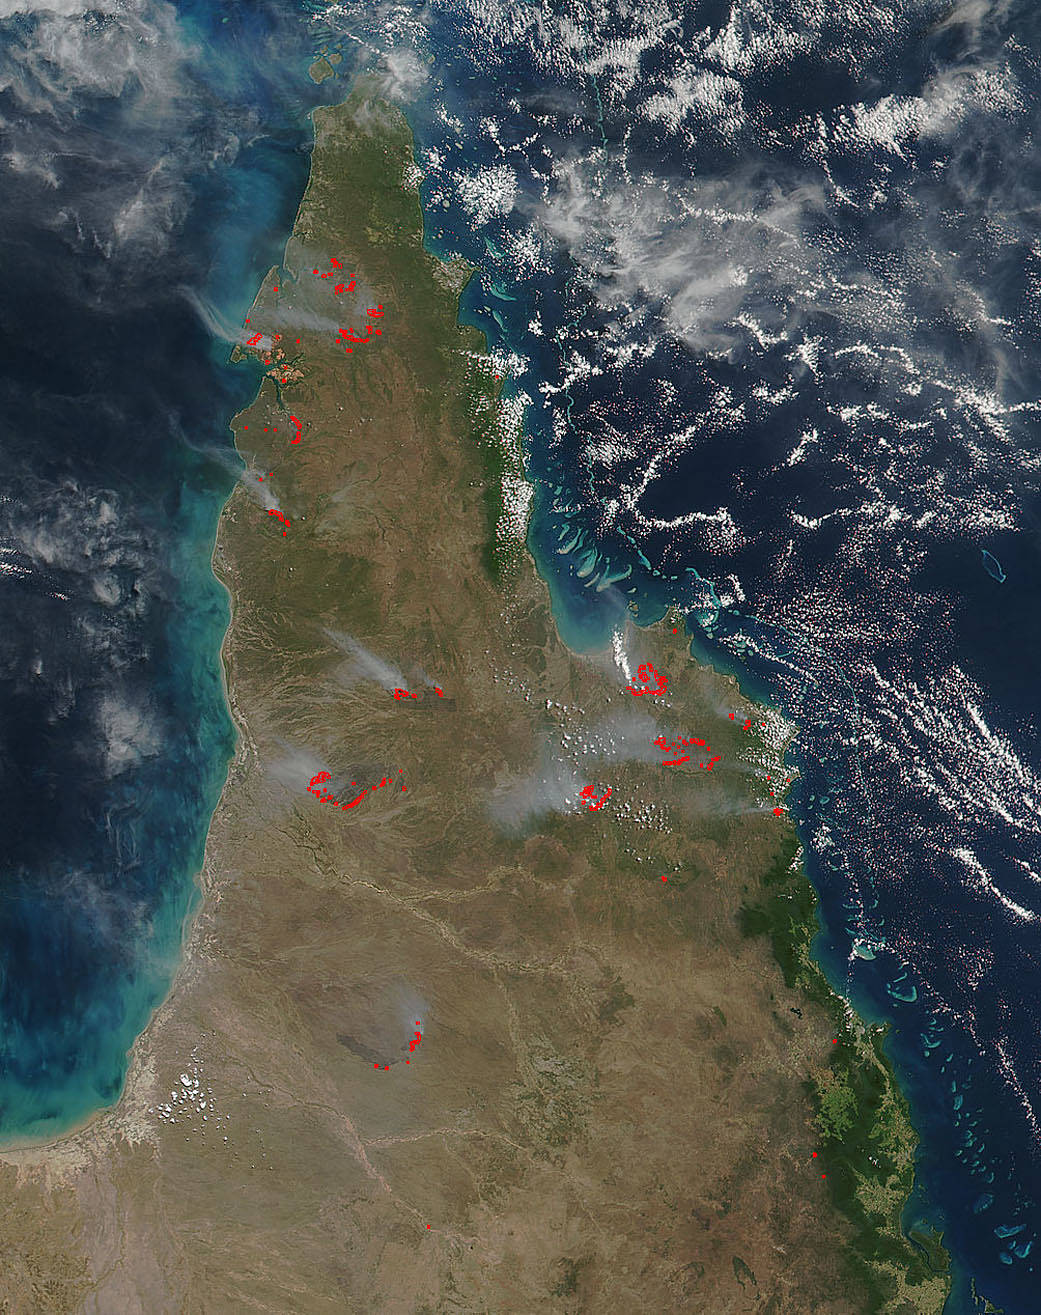 Fires across Cape York Peninsula, Australia